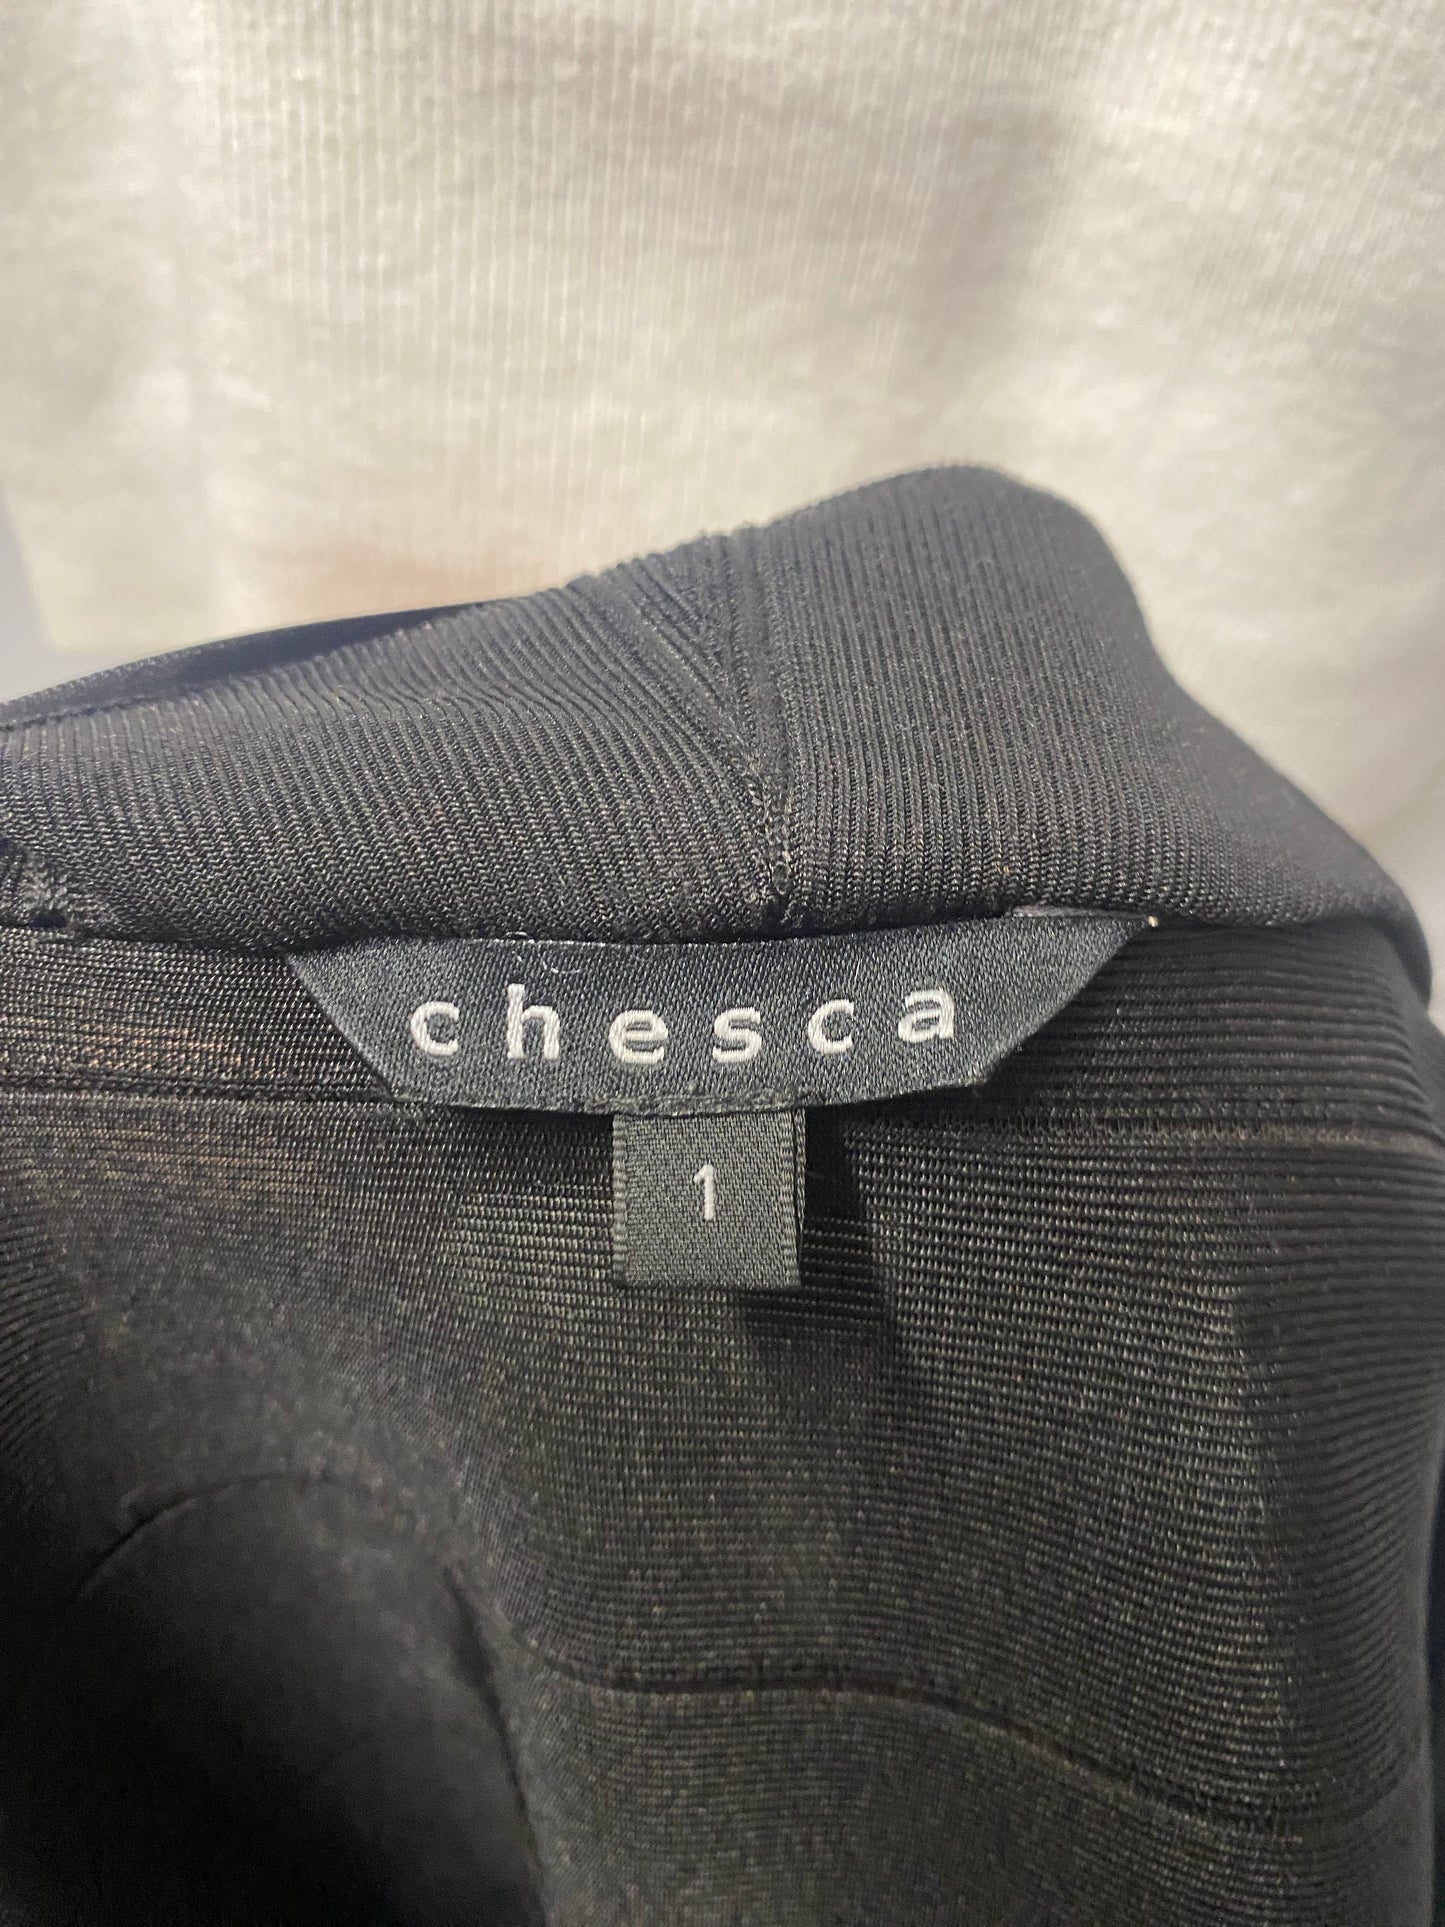 Chesca Black Stretch Smart Jacket Small